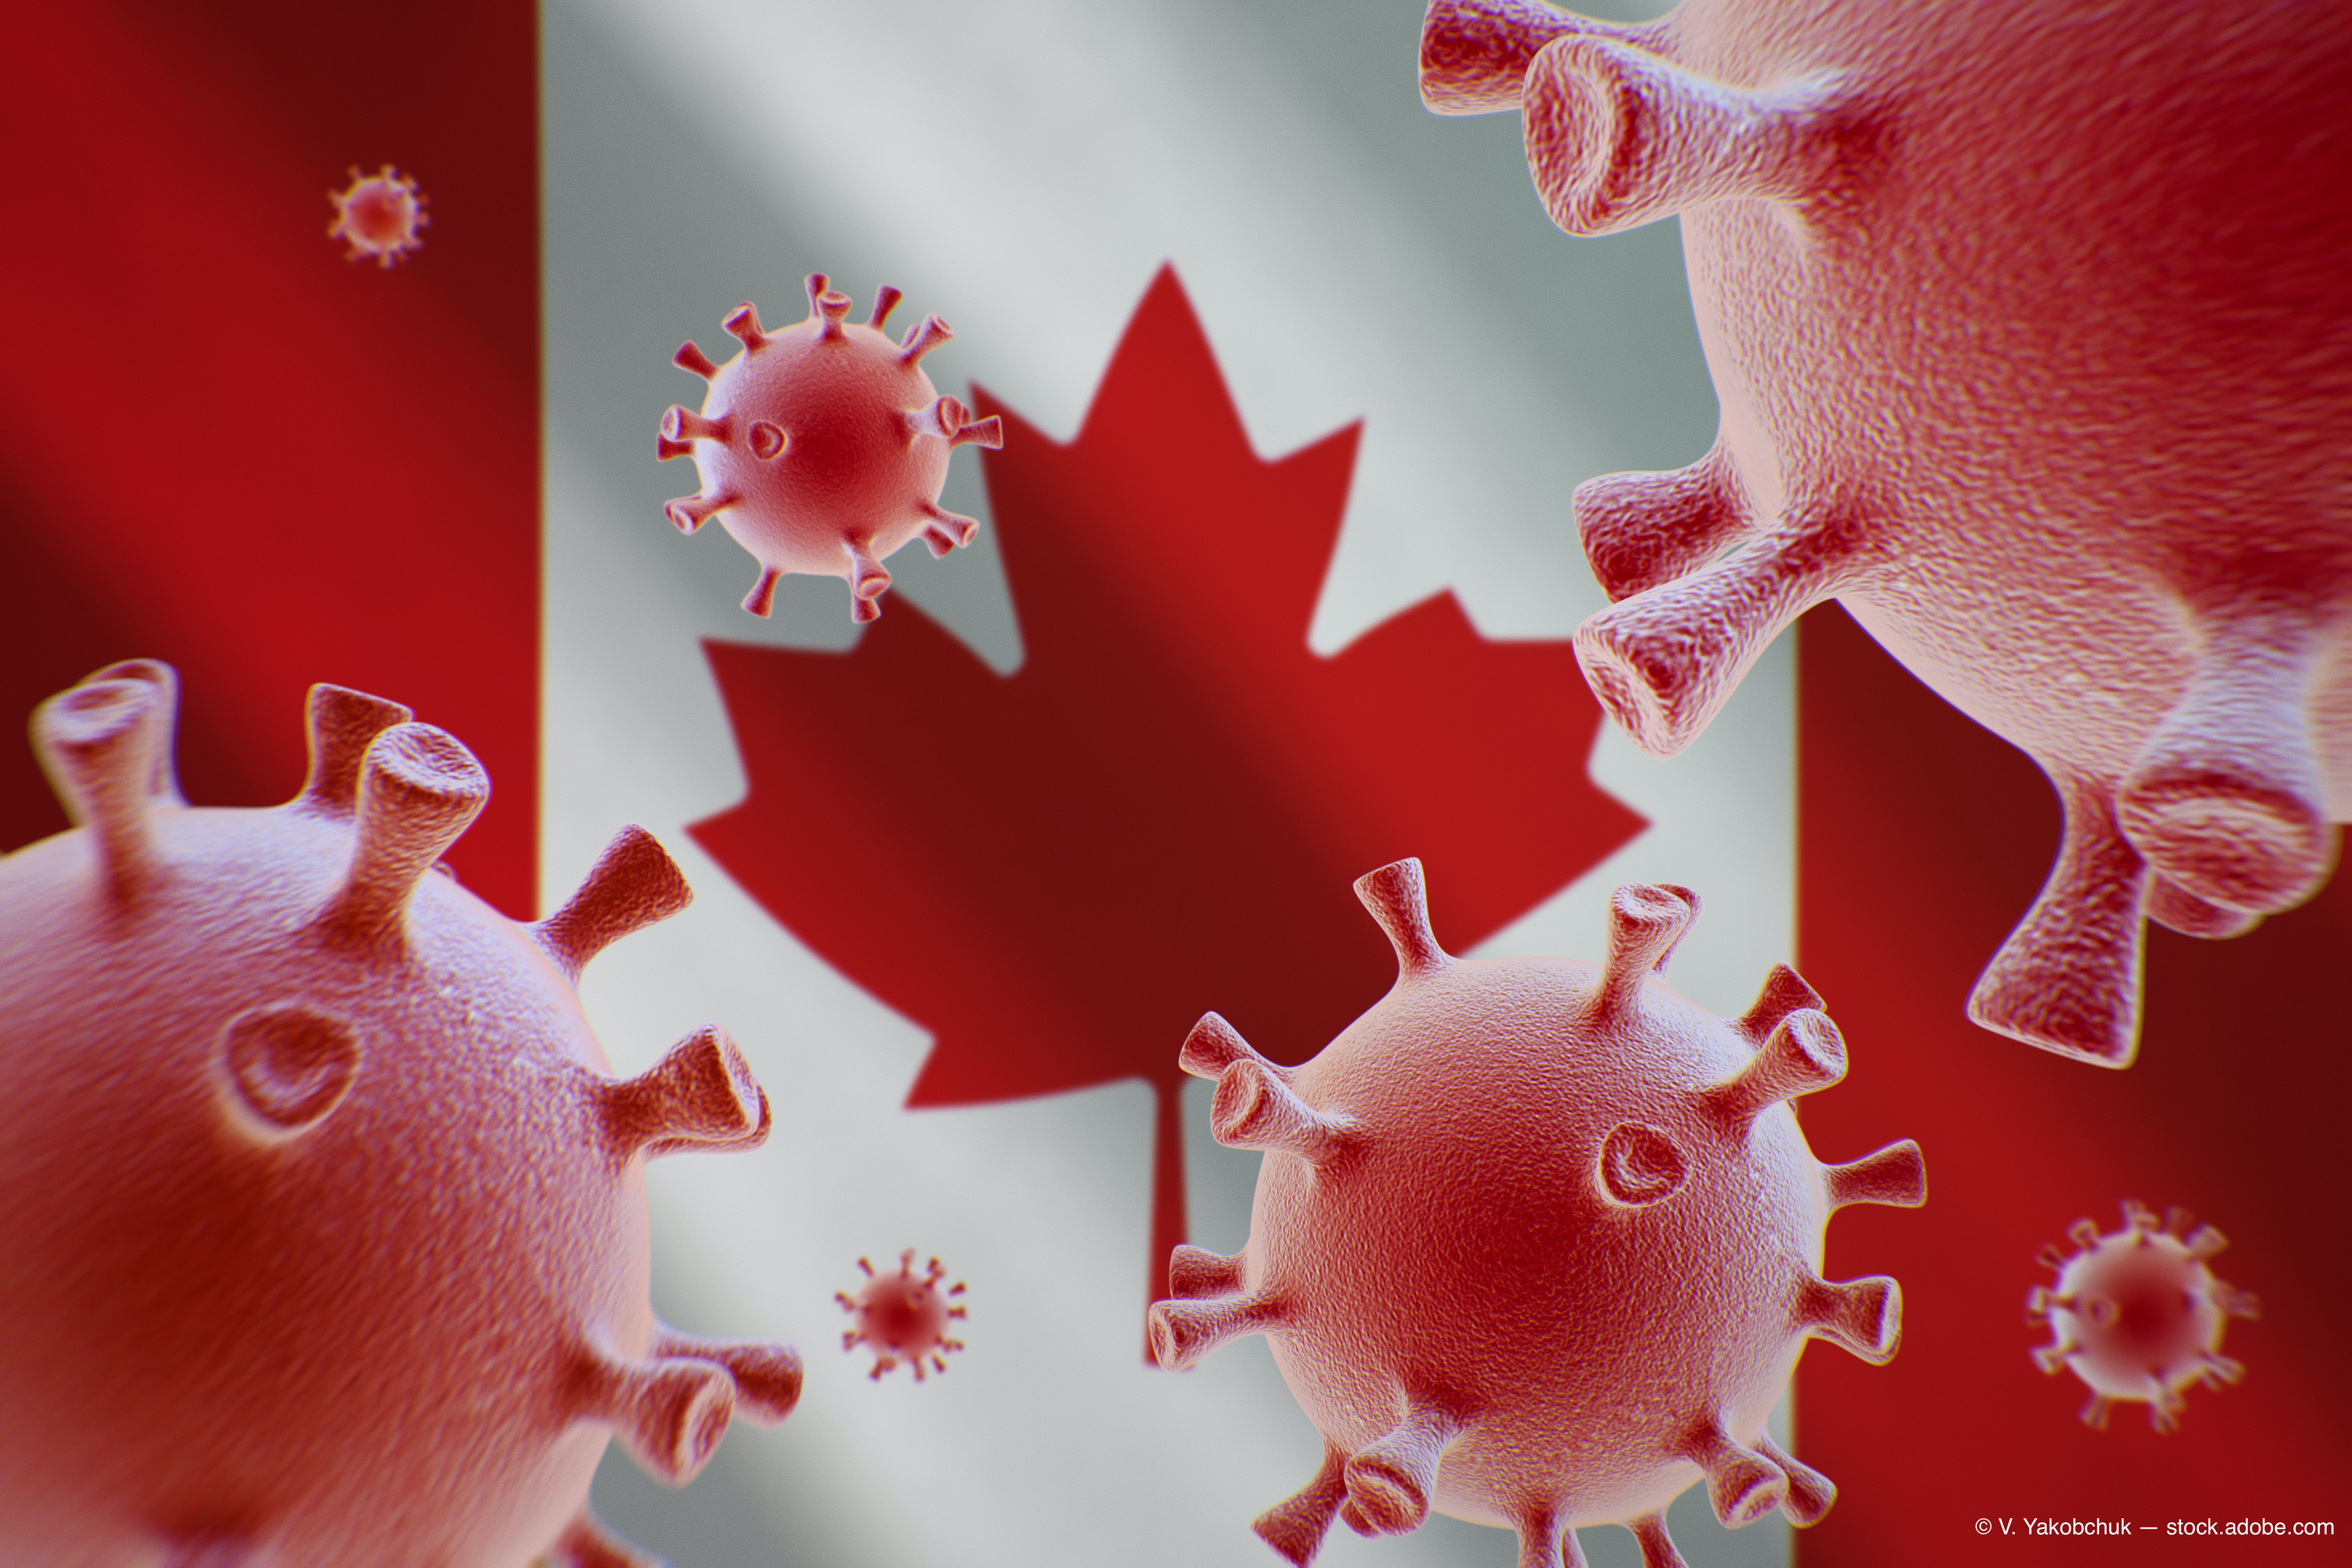 coronavirus in Canada